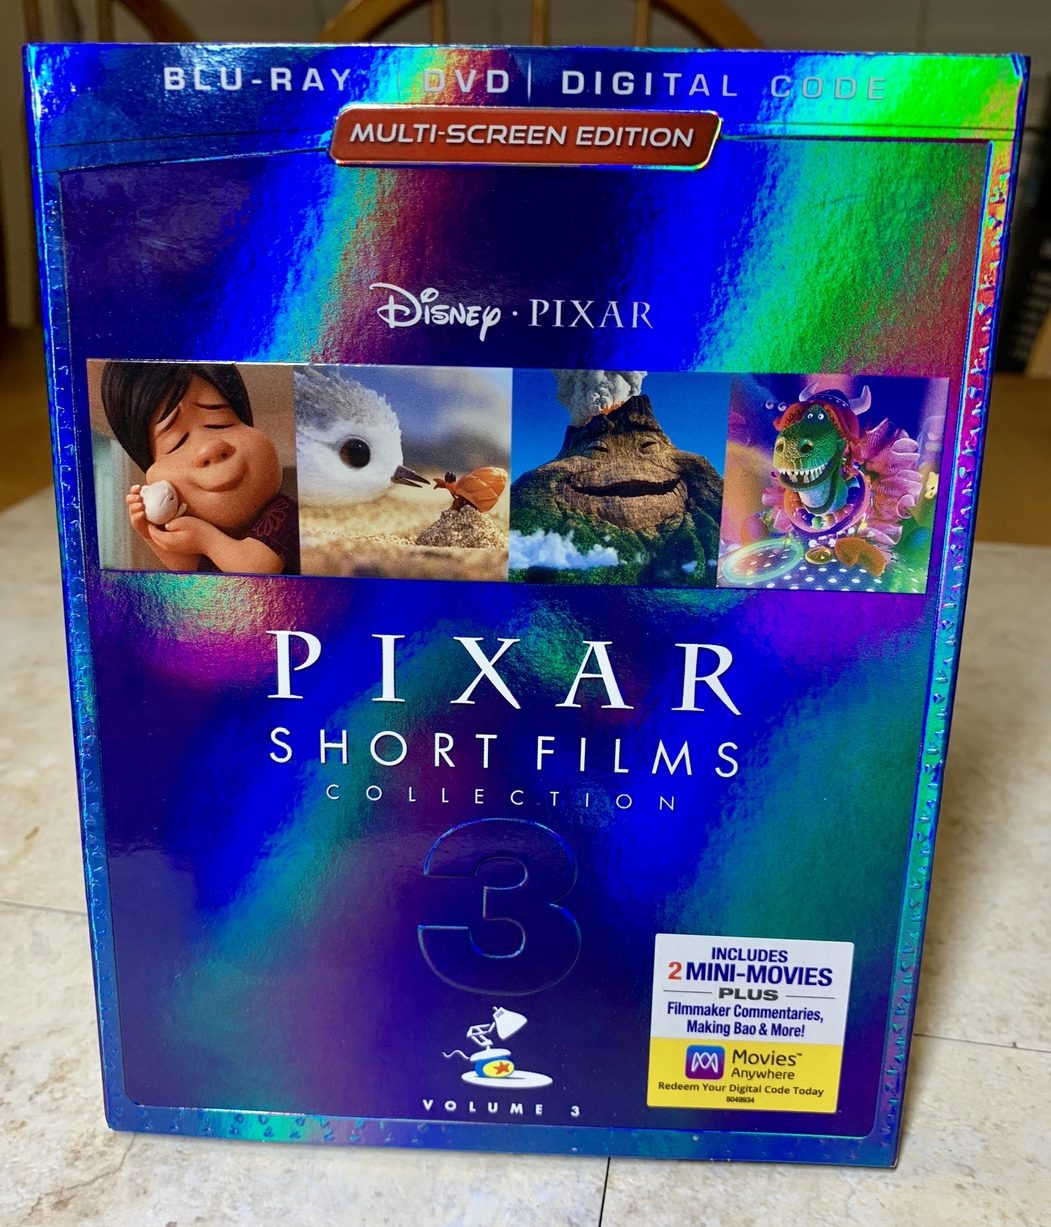 Pixar Short Films Collection: Volume 3 #Pixar #Animation #Disney #ad